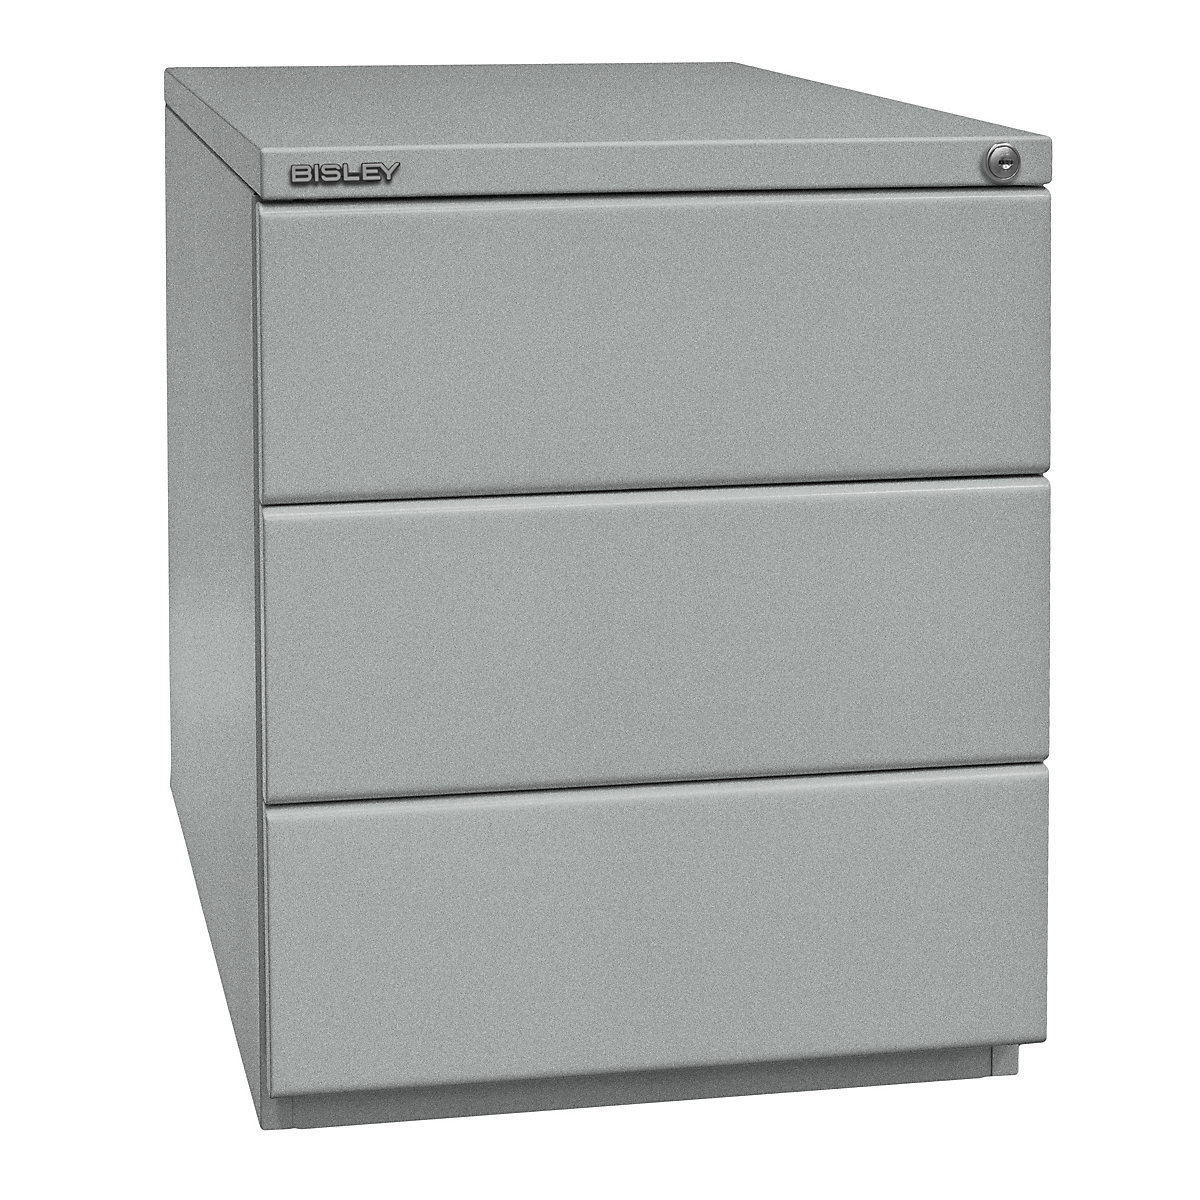 OBA mobile pedestal – BISLEY, 3 universal drawers, silver-5